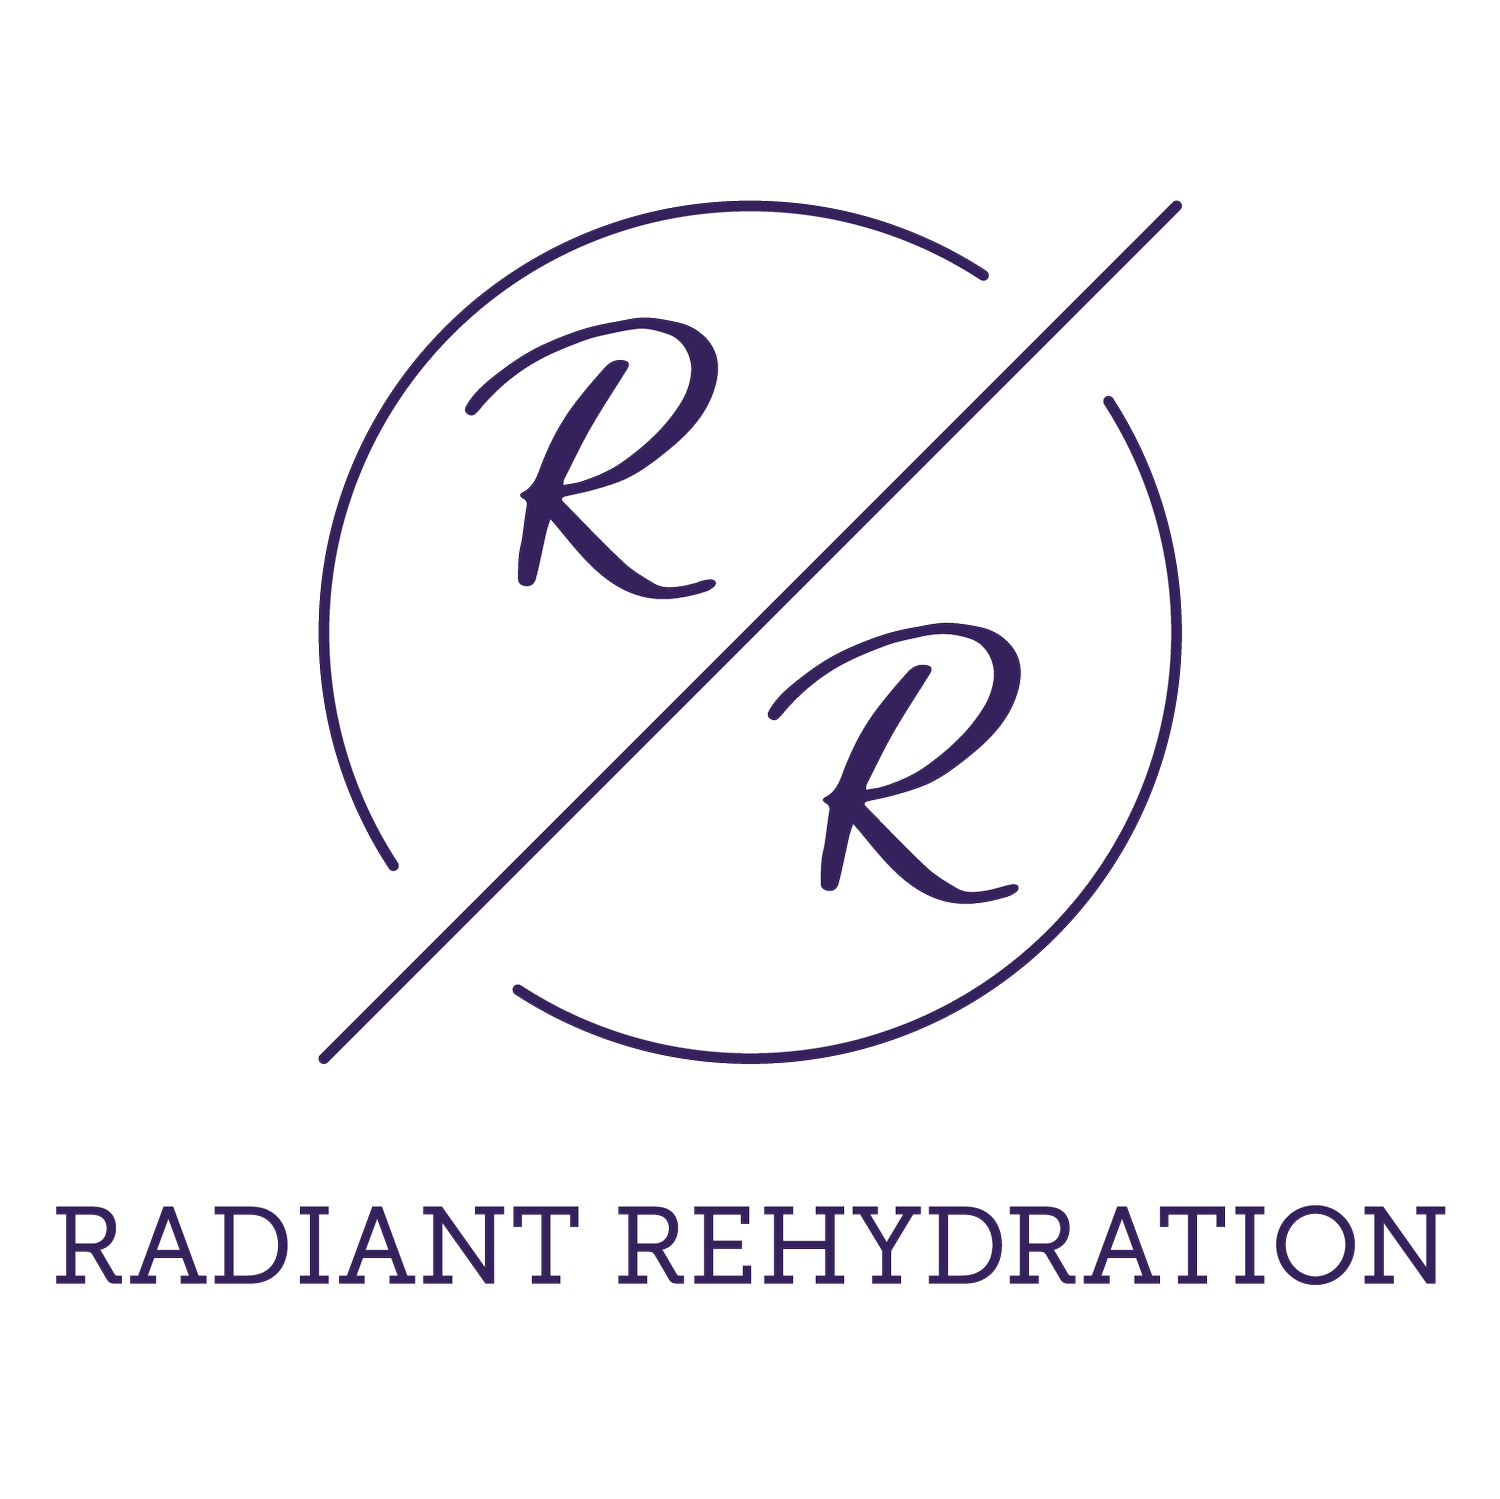 Radiant Rehydration